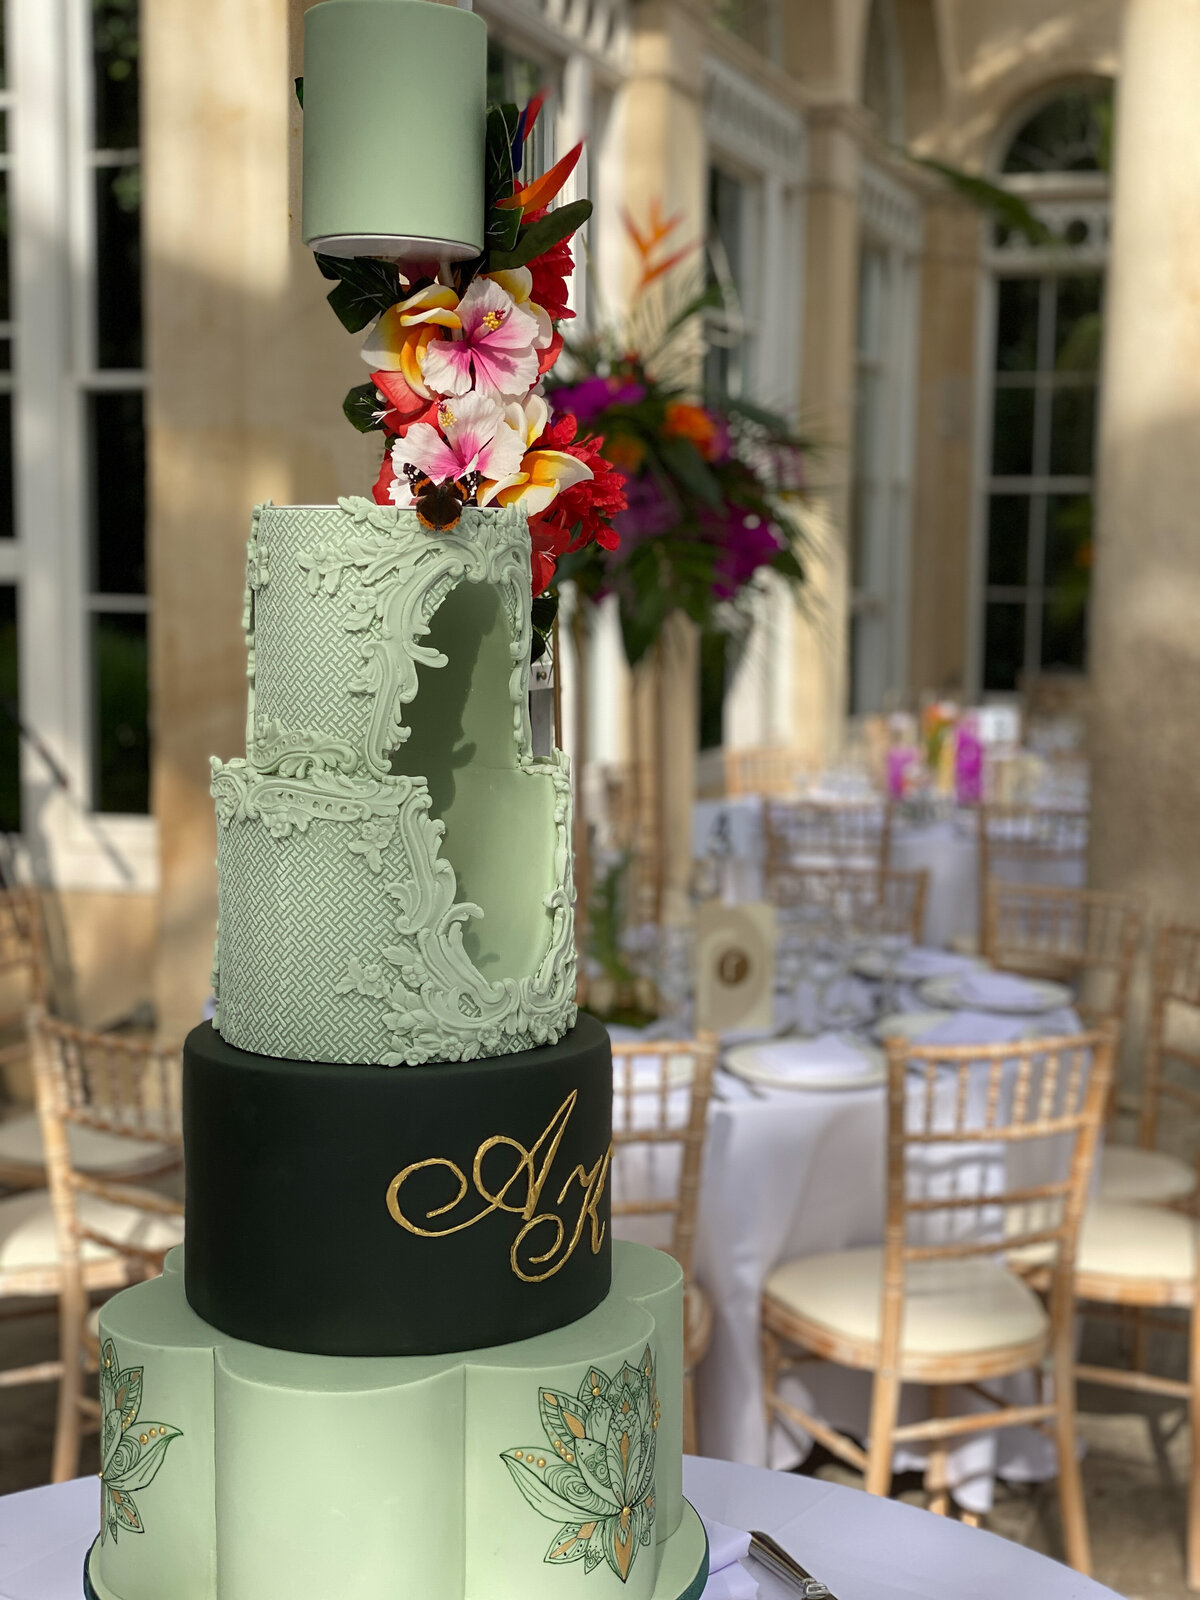 Tropical wedding cake